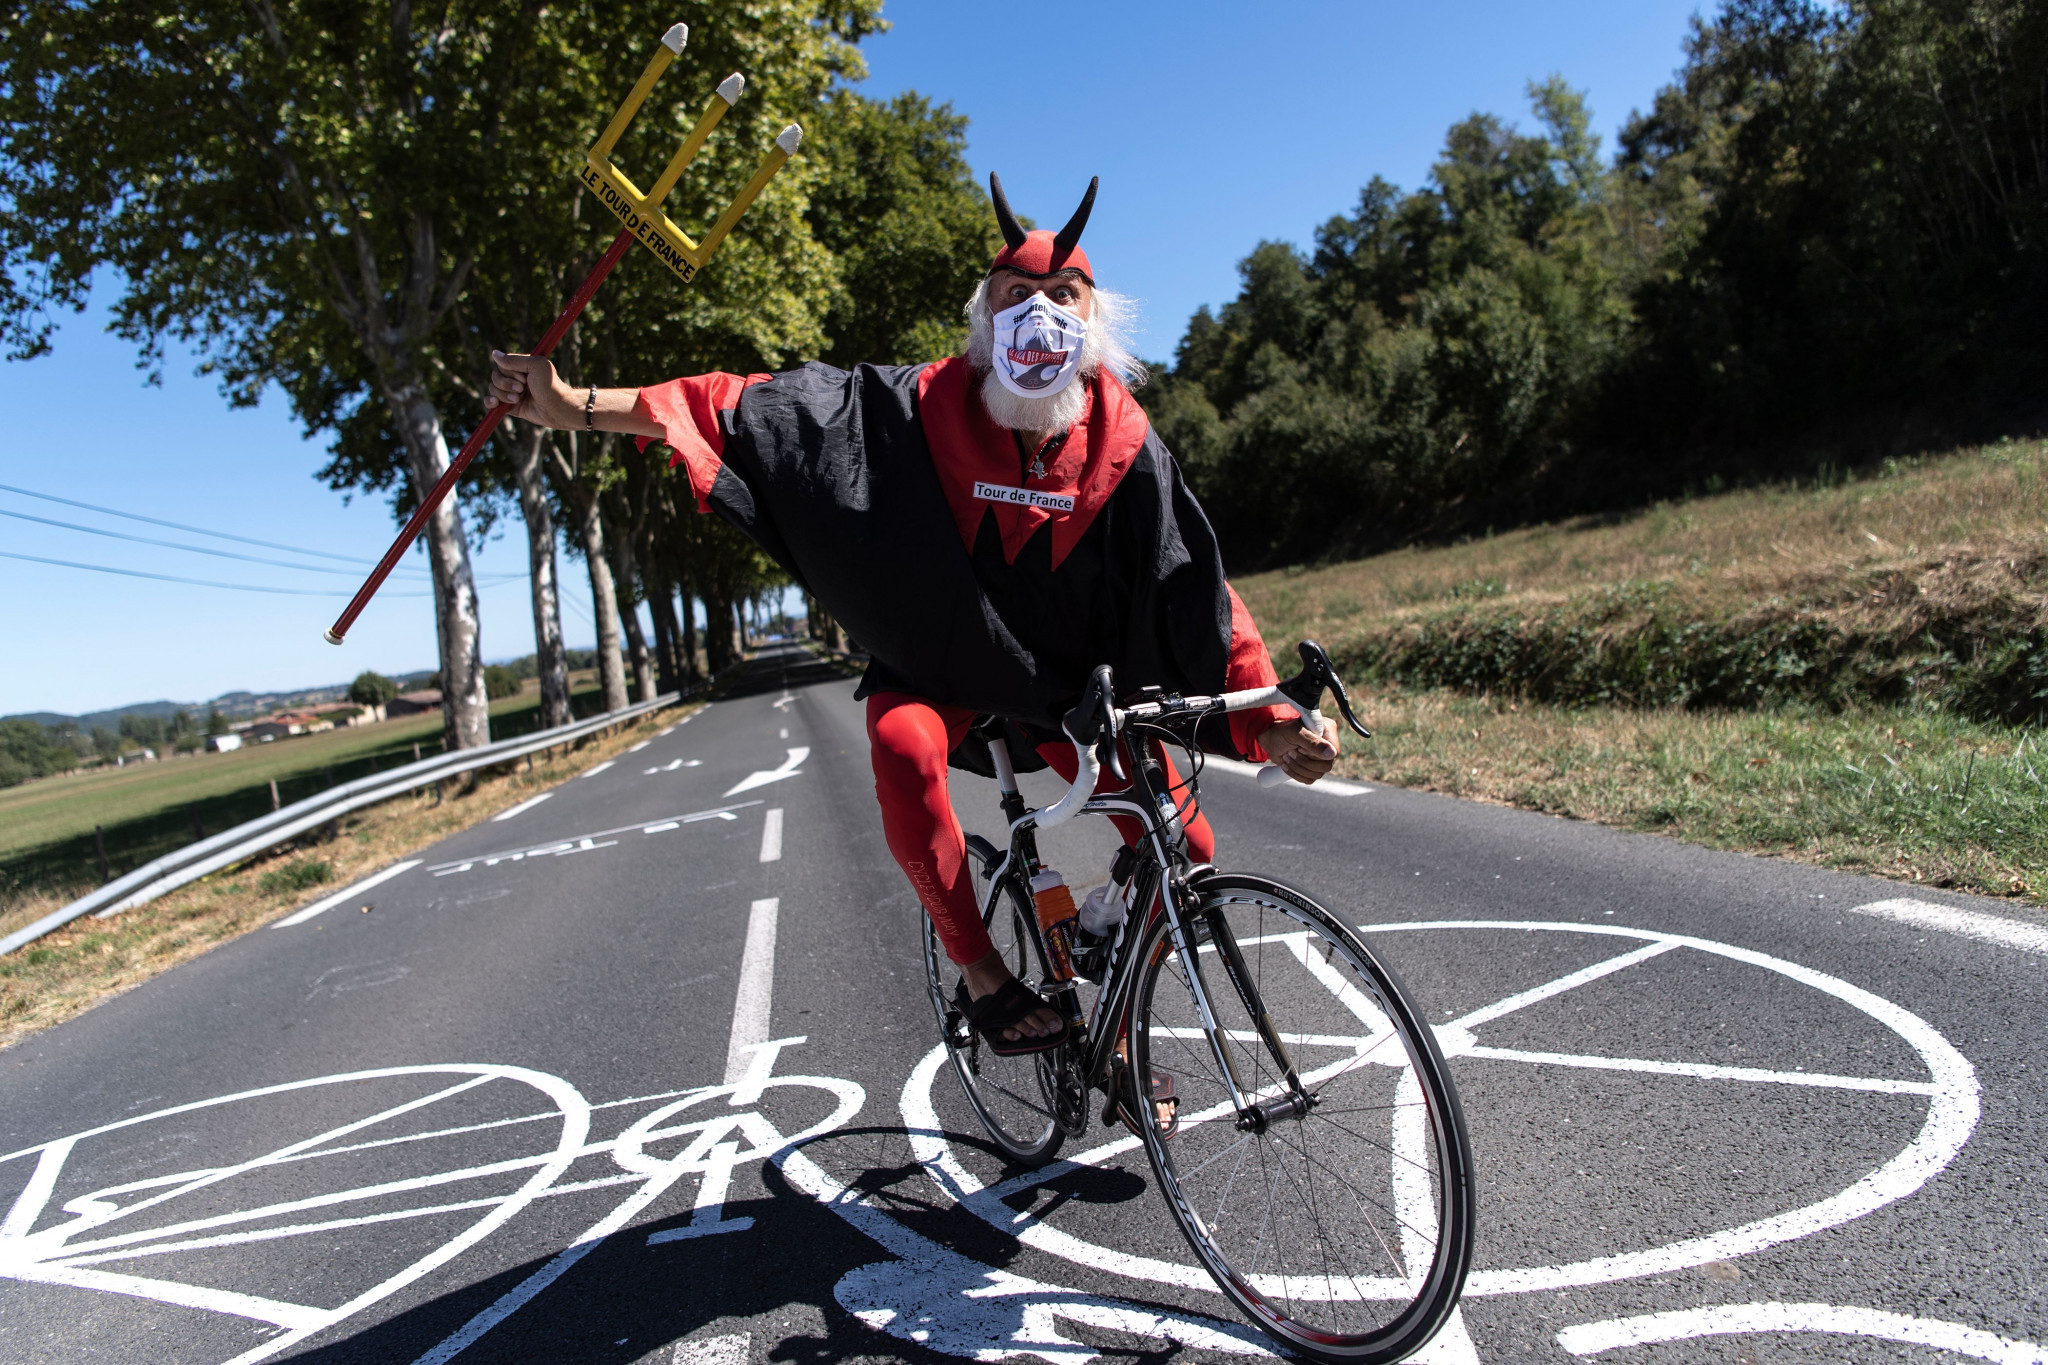 Tour de France fan Didi the Devil was again among the spectators on the route ©Getty Images